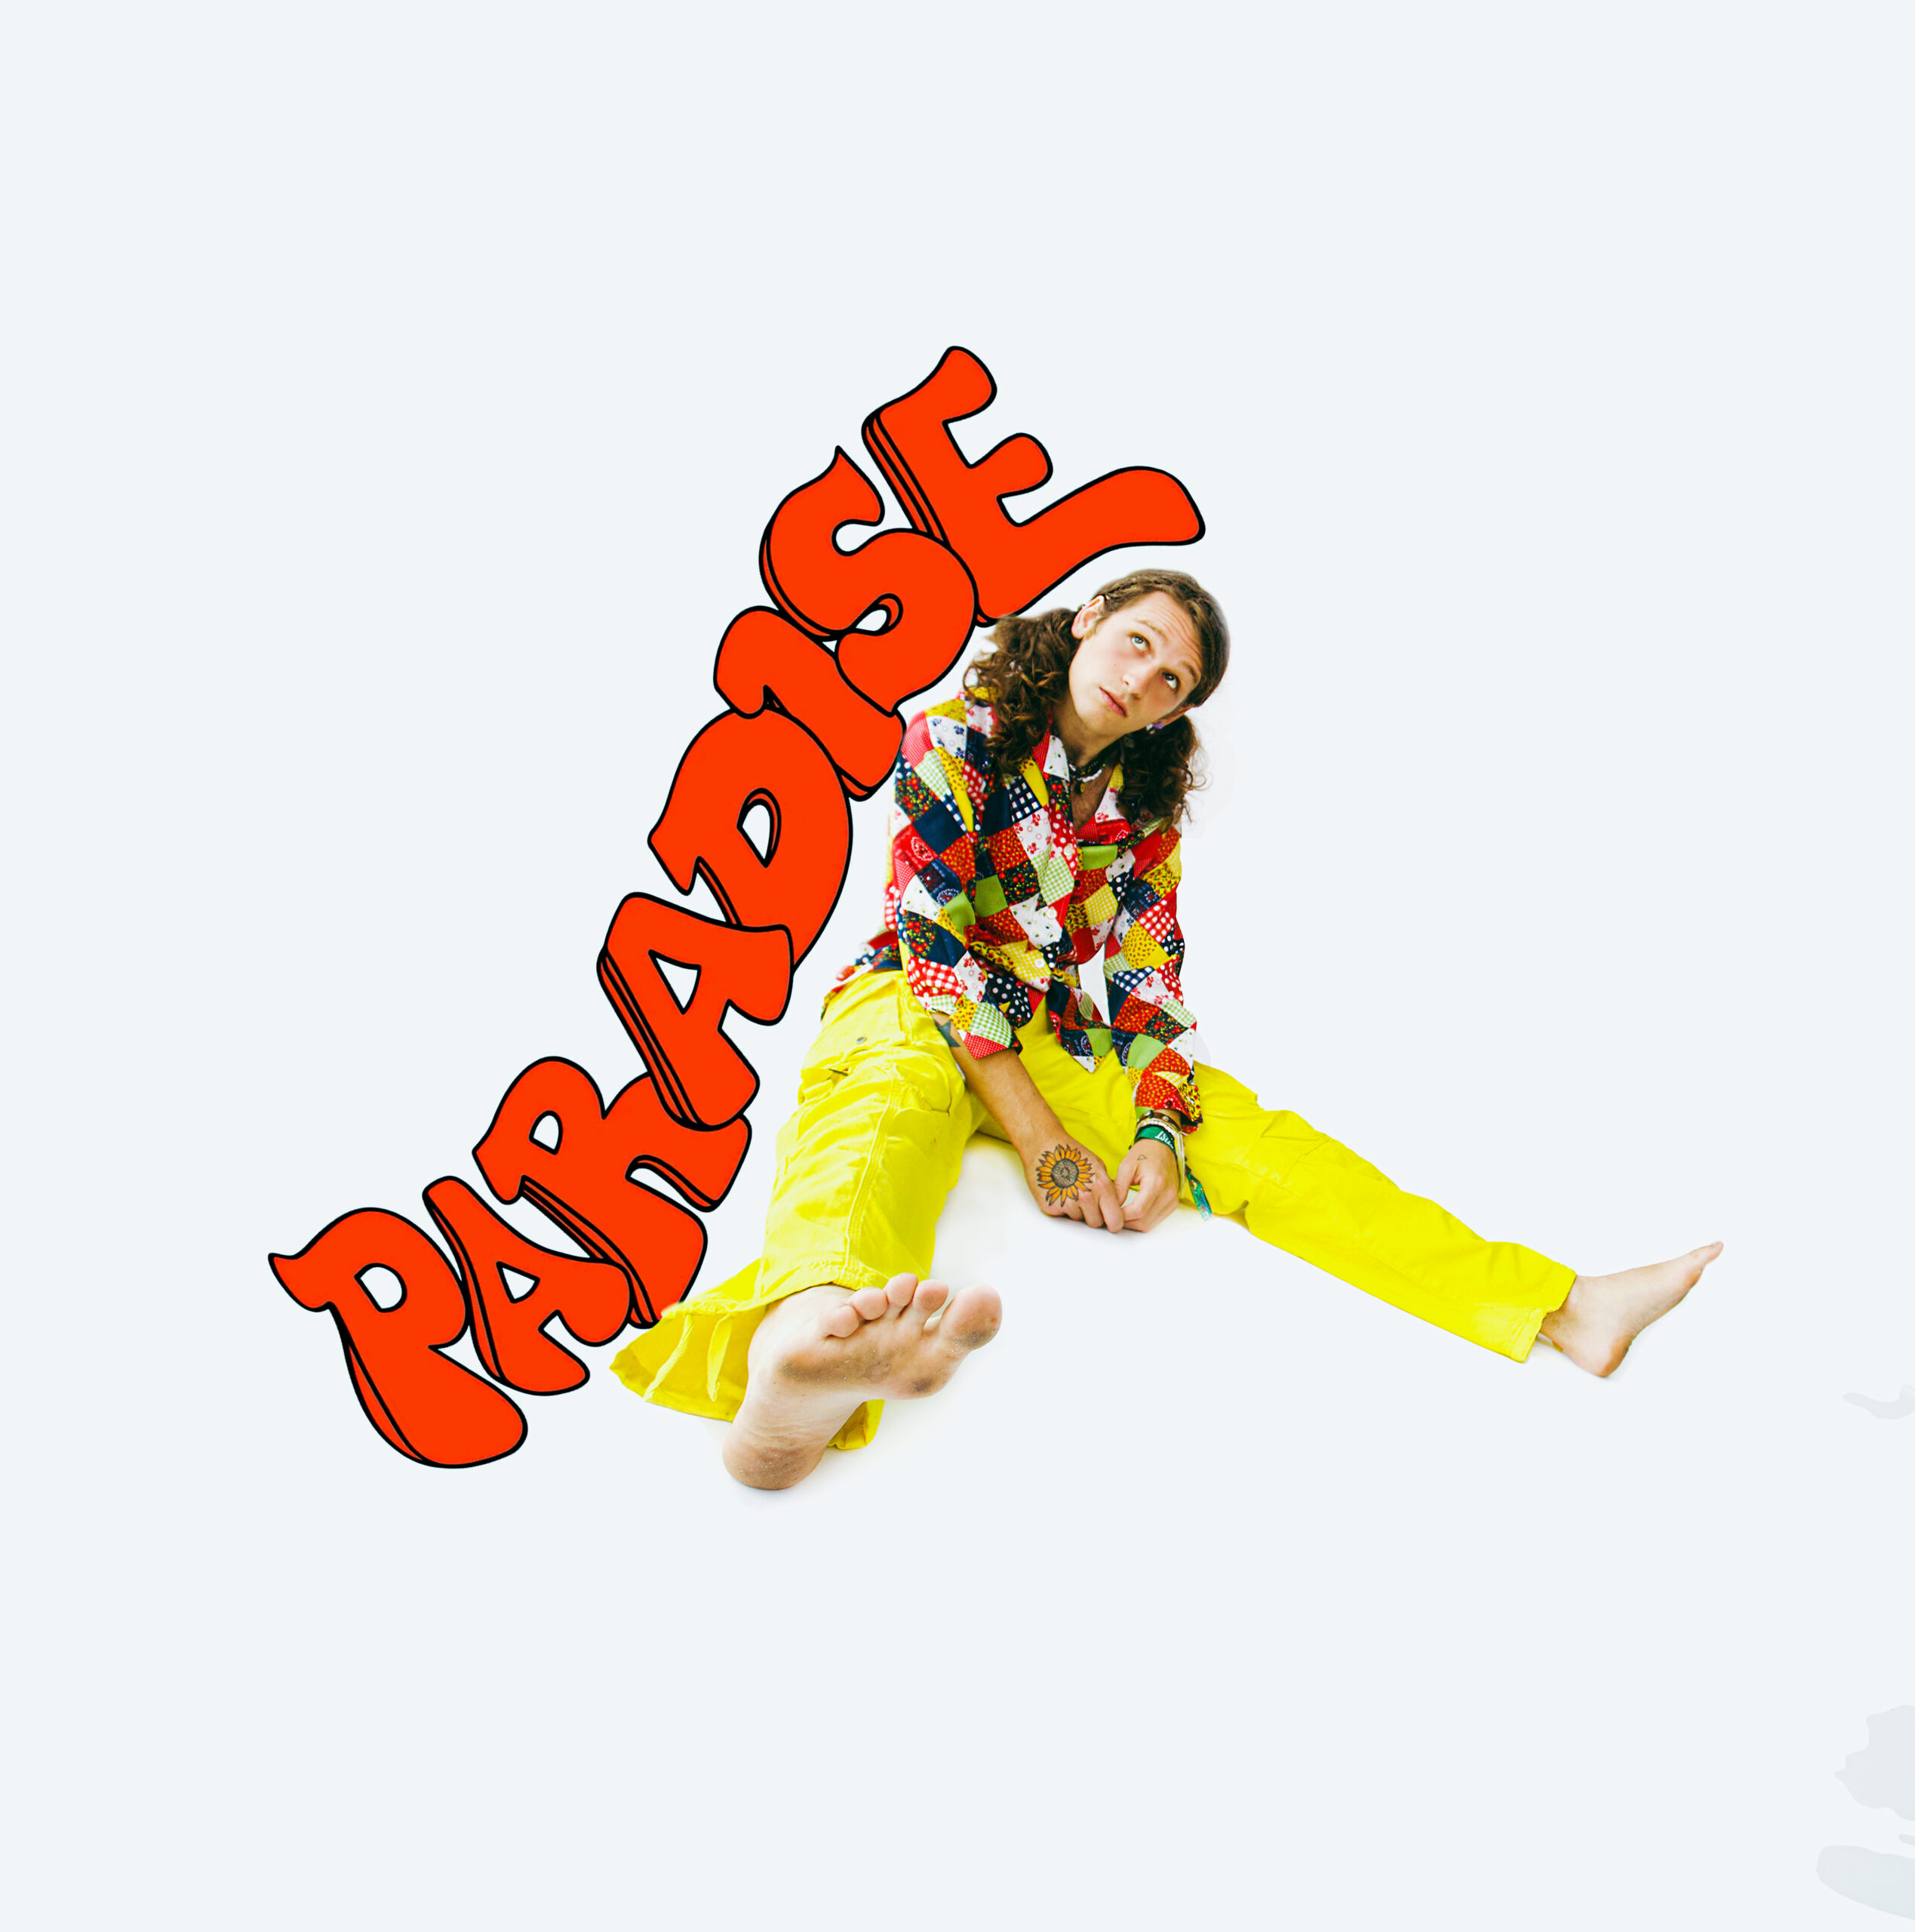 Briston Maroney announces Paradise Festival alongside new single “Paradise”